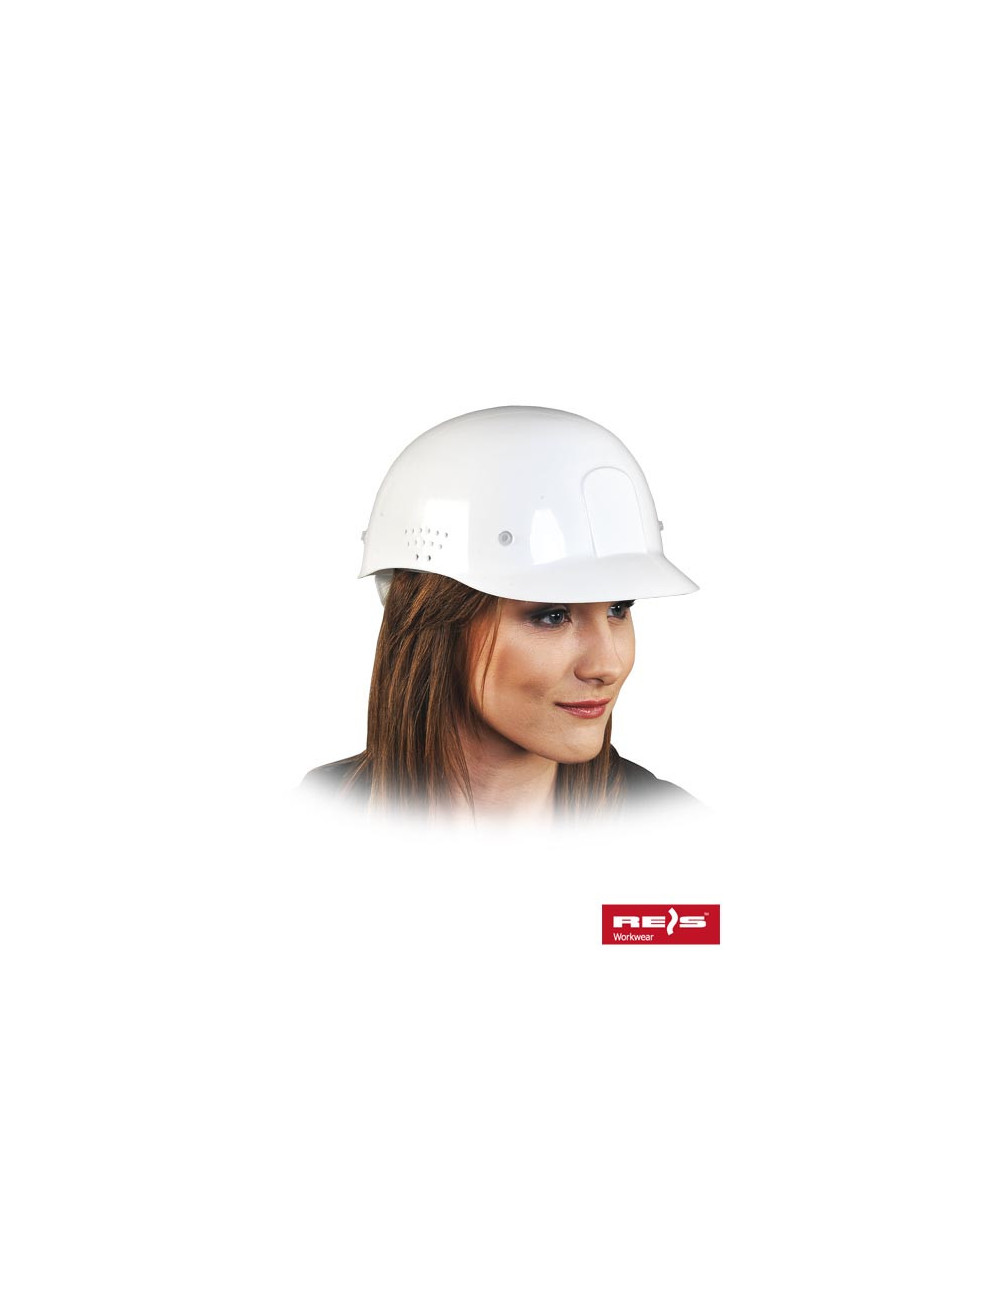 Industrial helmet lightweight bump-hdpe in white Reis